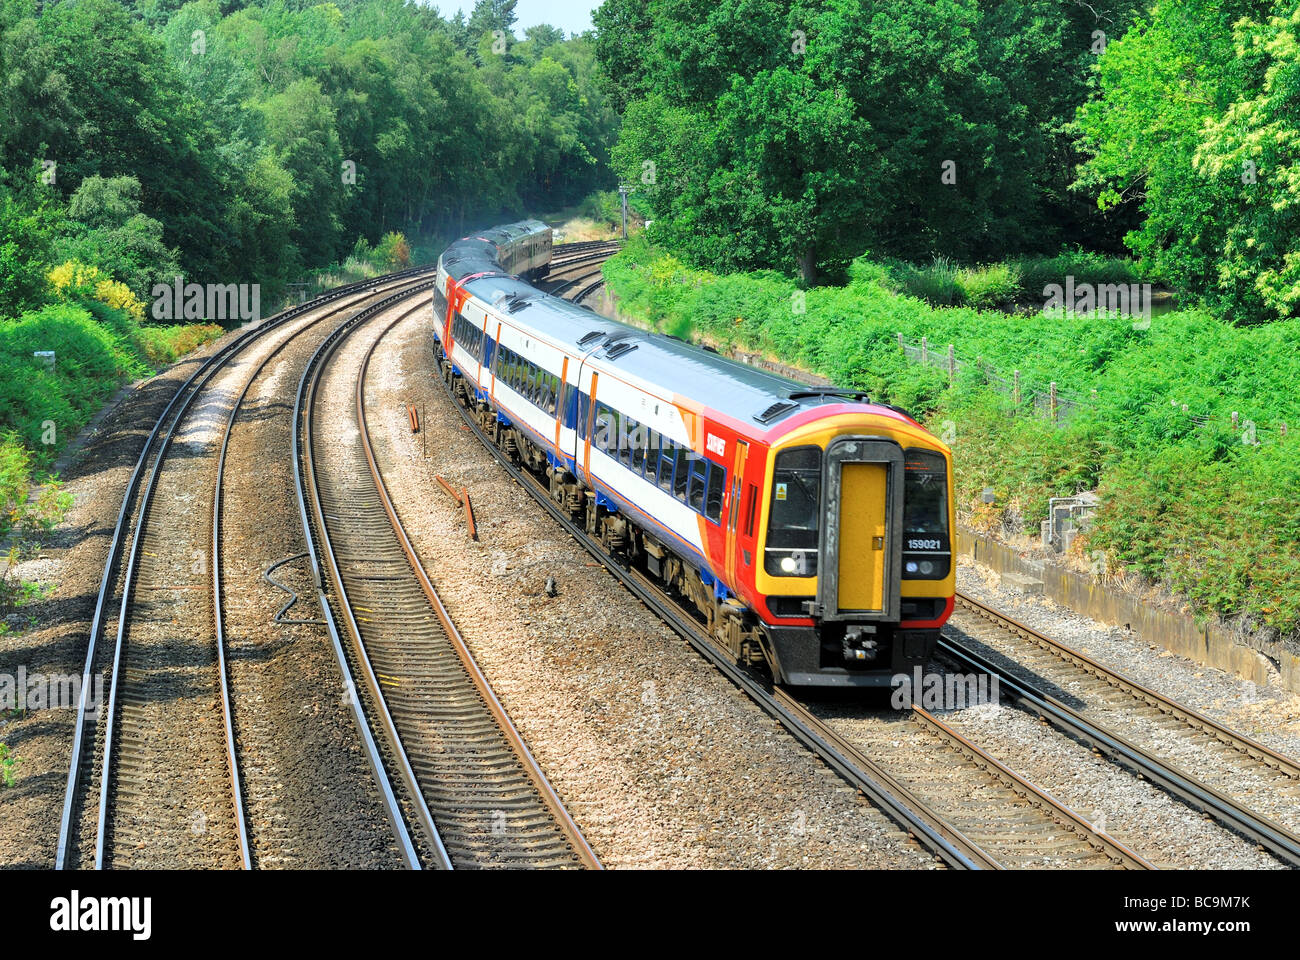 British rail express train in countryside Stock Photo